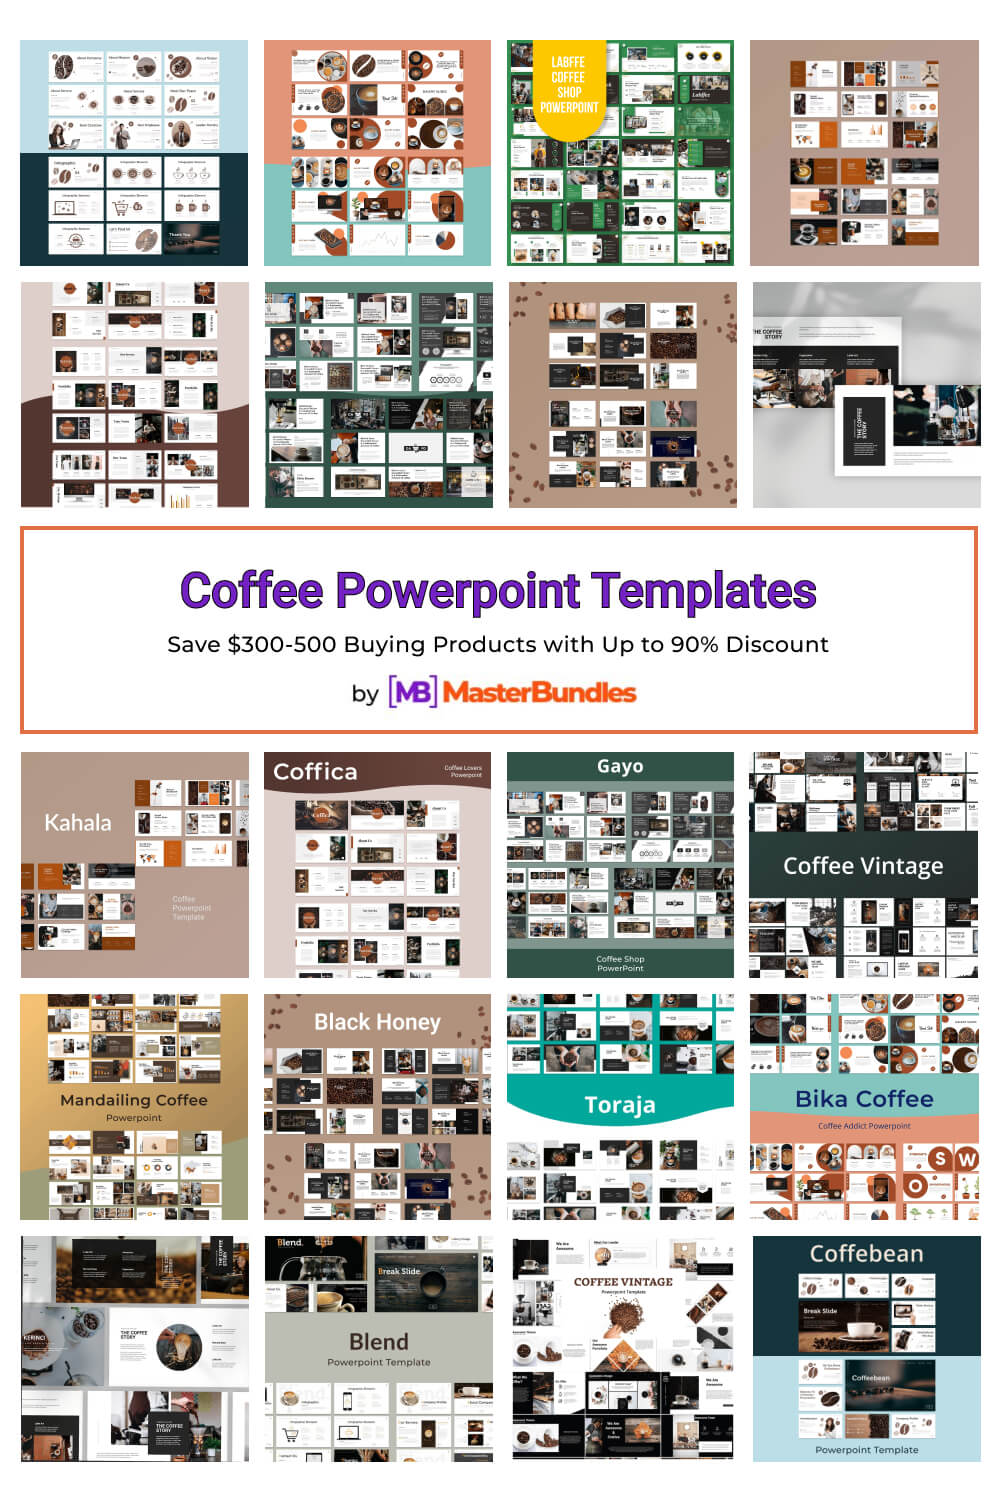 coffee powerpoint templates pinterest image.